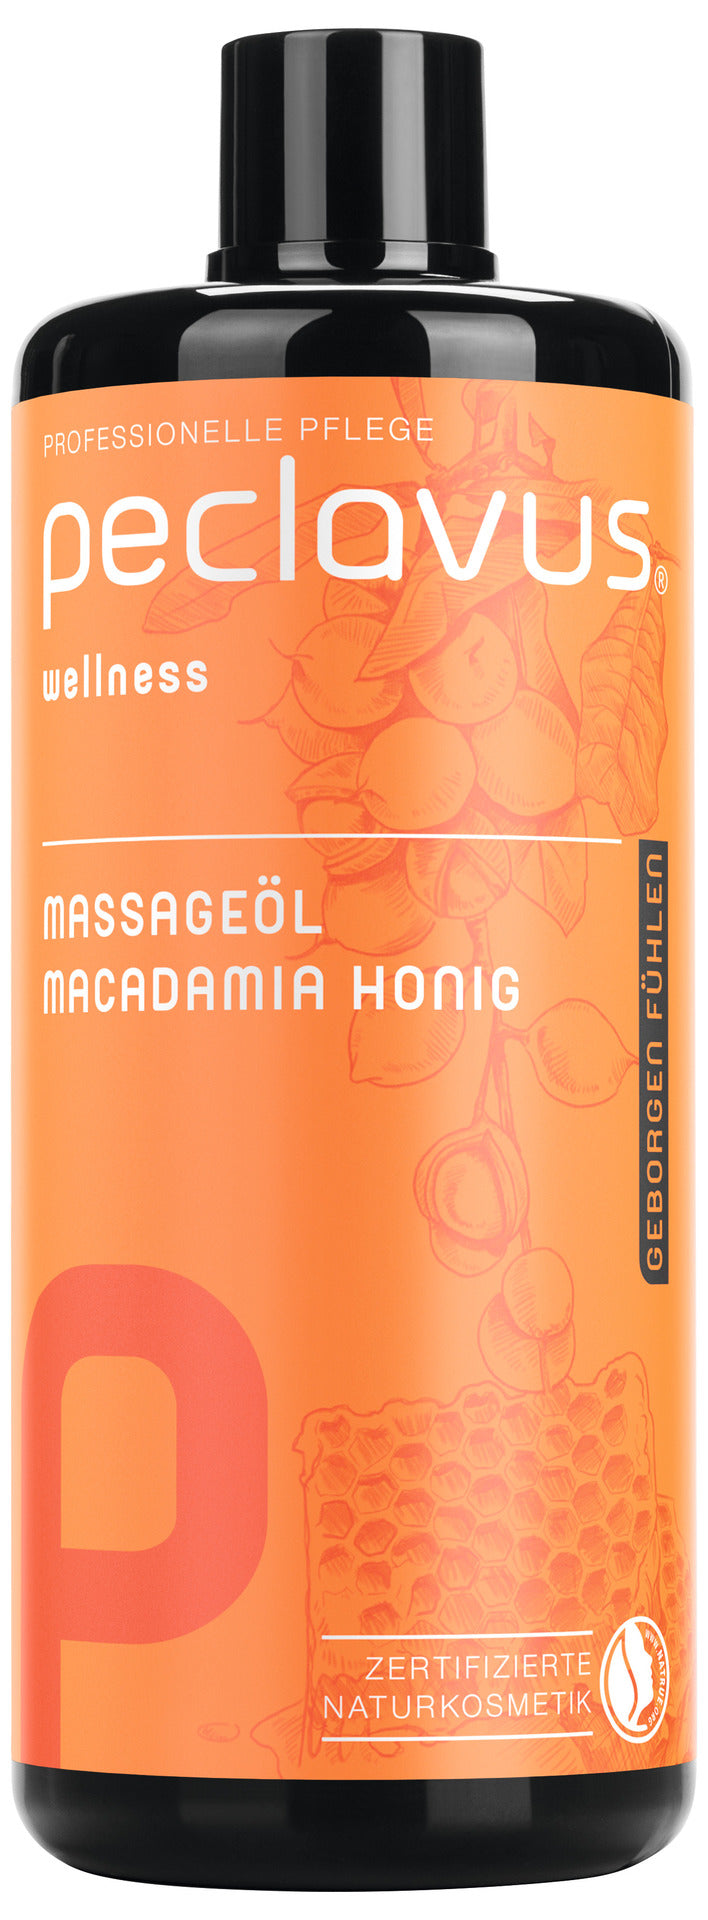 Huile de massage - Miel de Macadamia - 500 ml - Peclavus